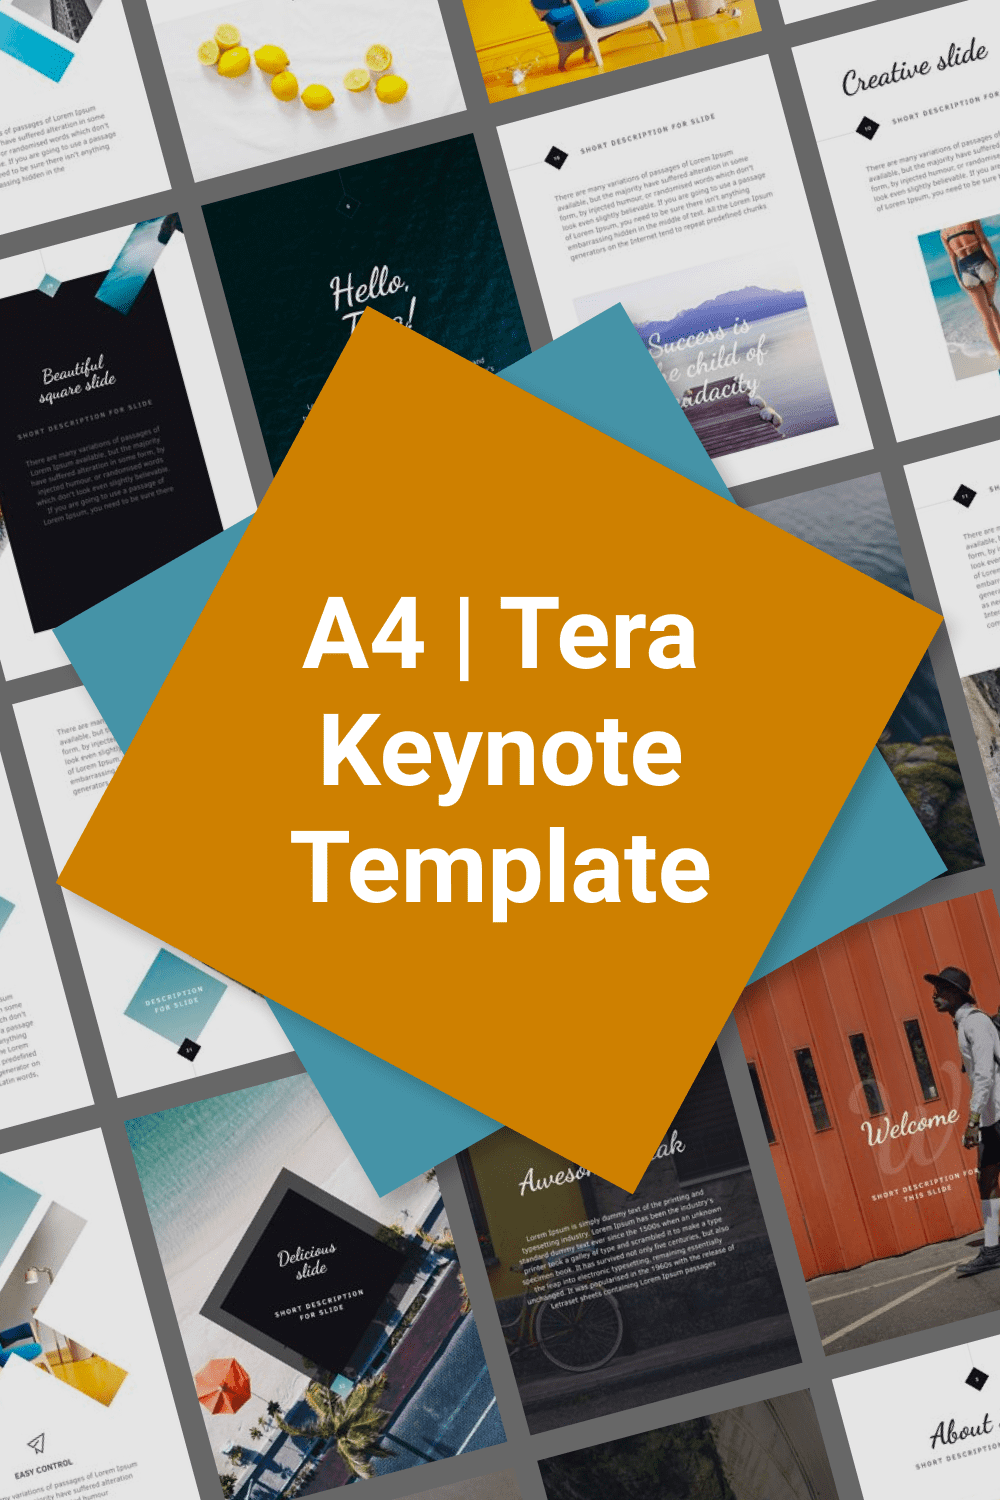 A4 Tera Keynote Template by MasterBundles Pinterest Collage Image.